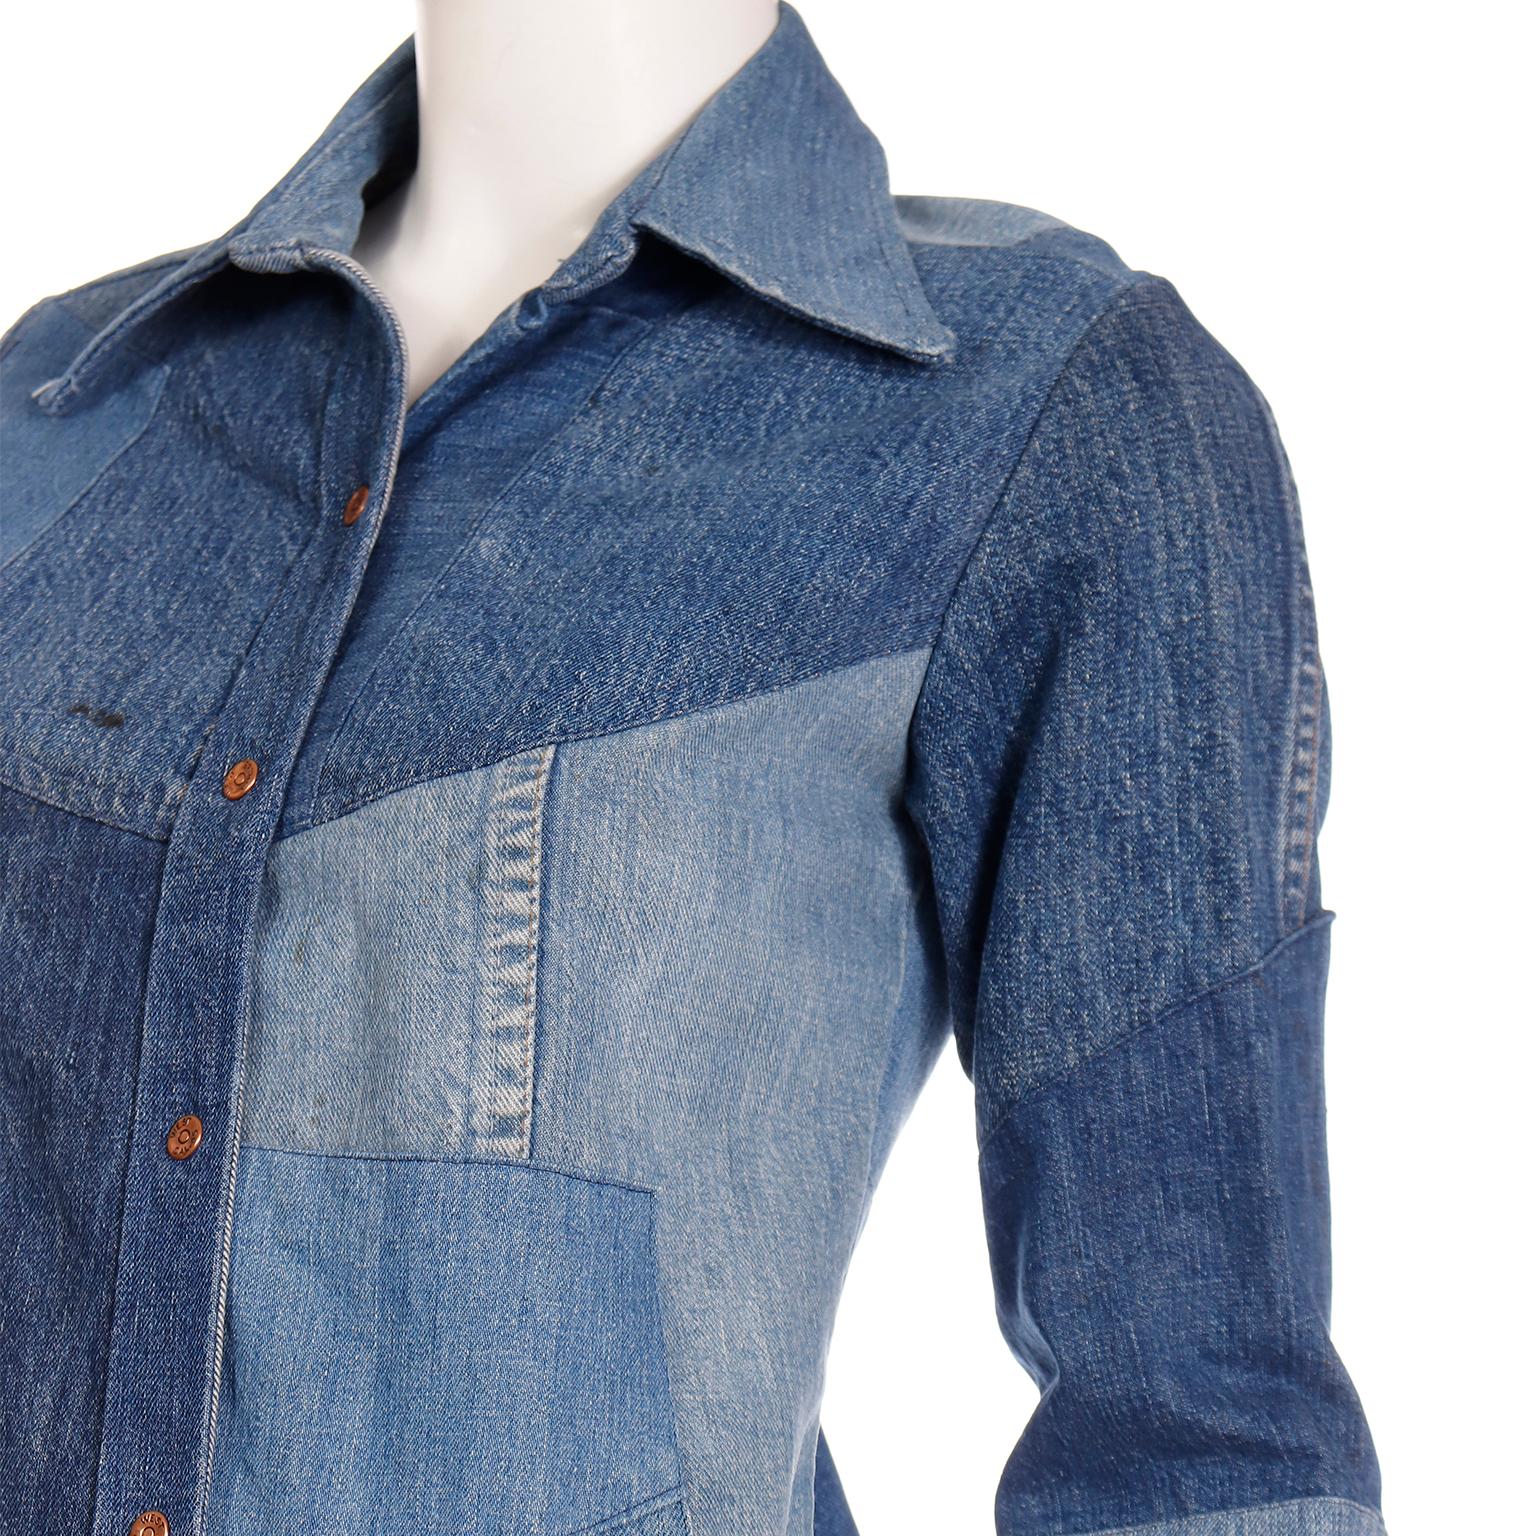 Simis Vintage 1970s Patchwork Denim Jeans and Button Front Shirt 2 Pc Outfit 4